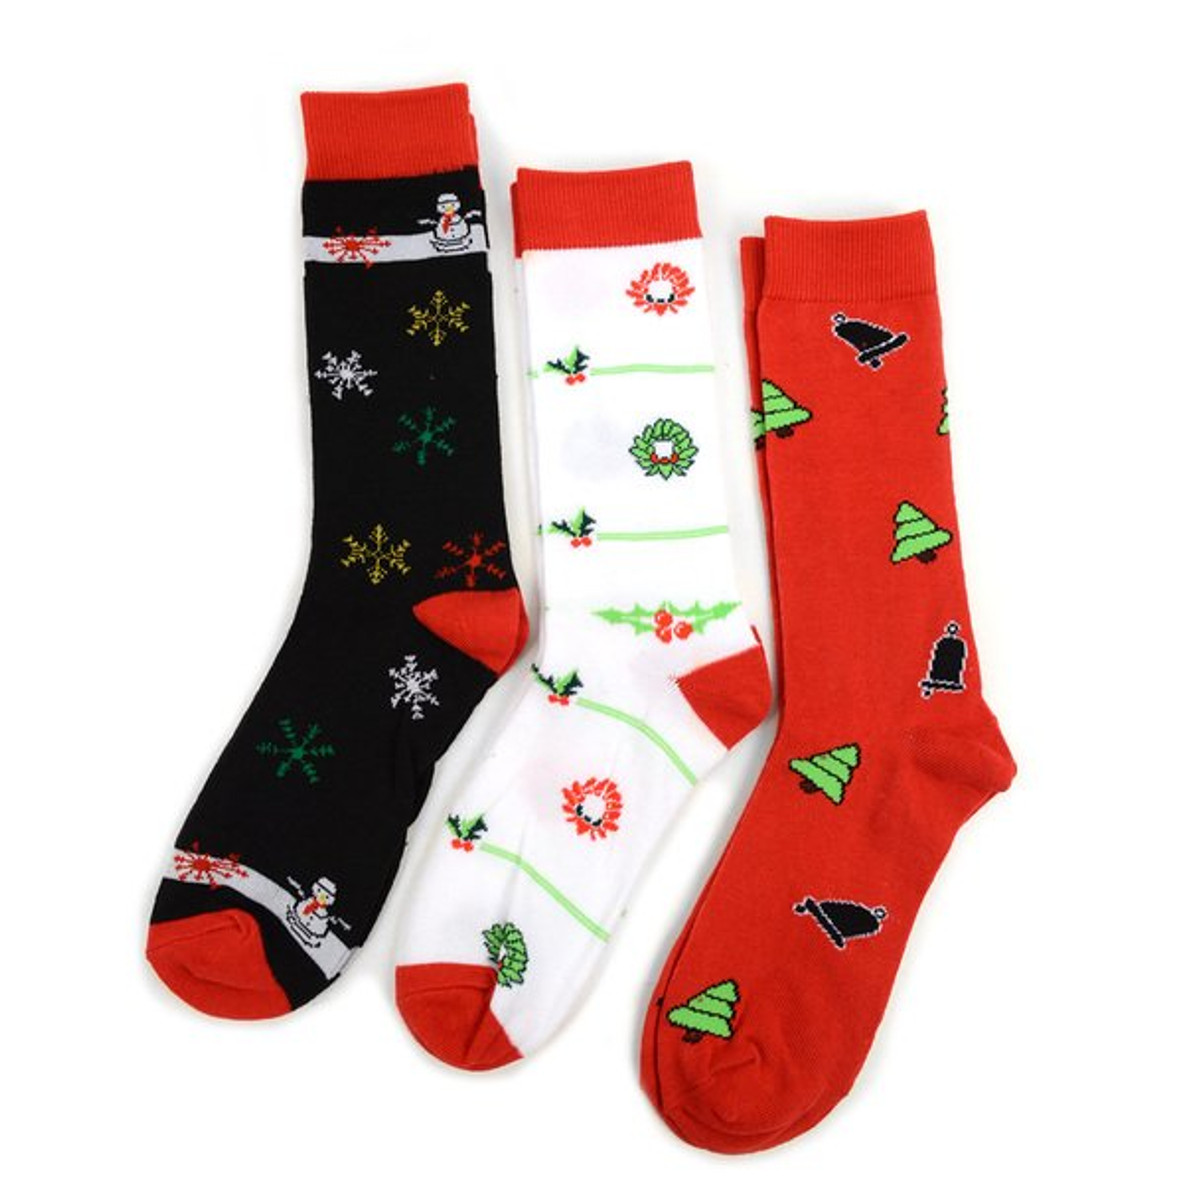 Women's Snowflakes, Trees & Ornaments Crew Novelty Socks 3 Pair Pack